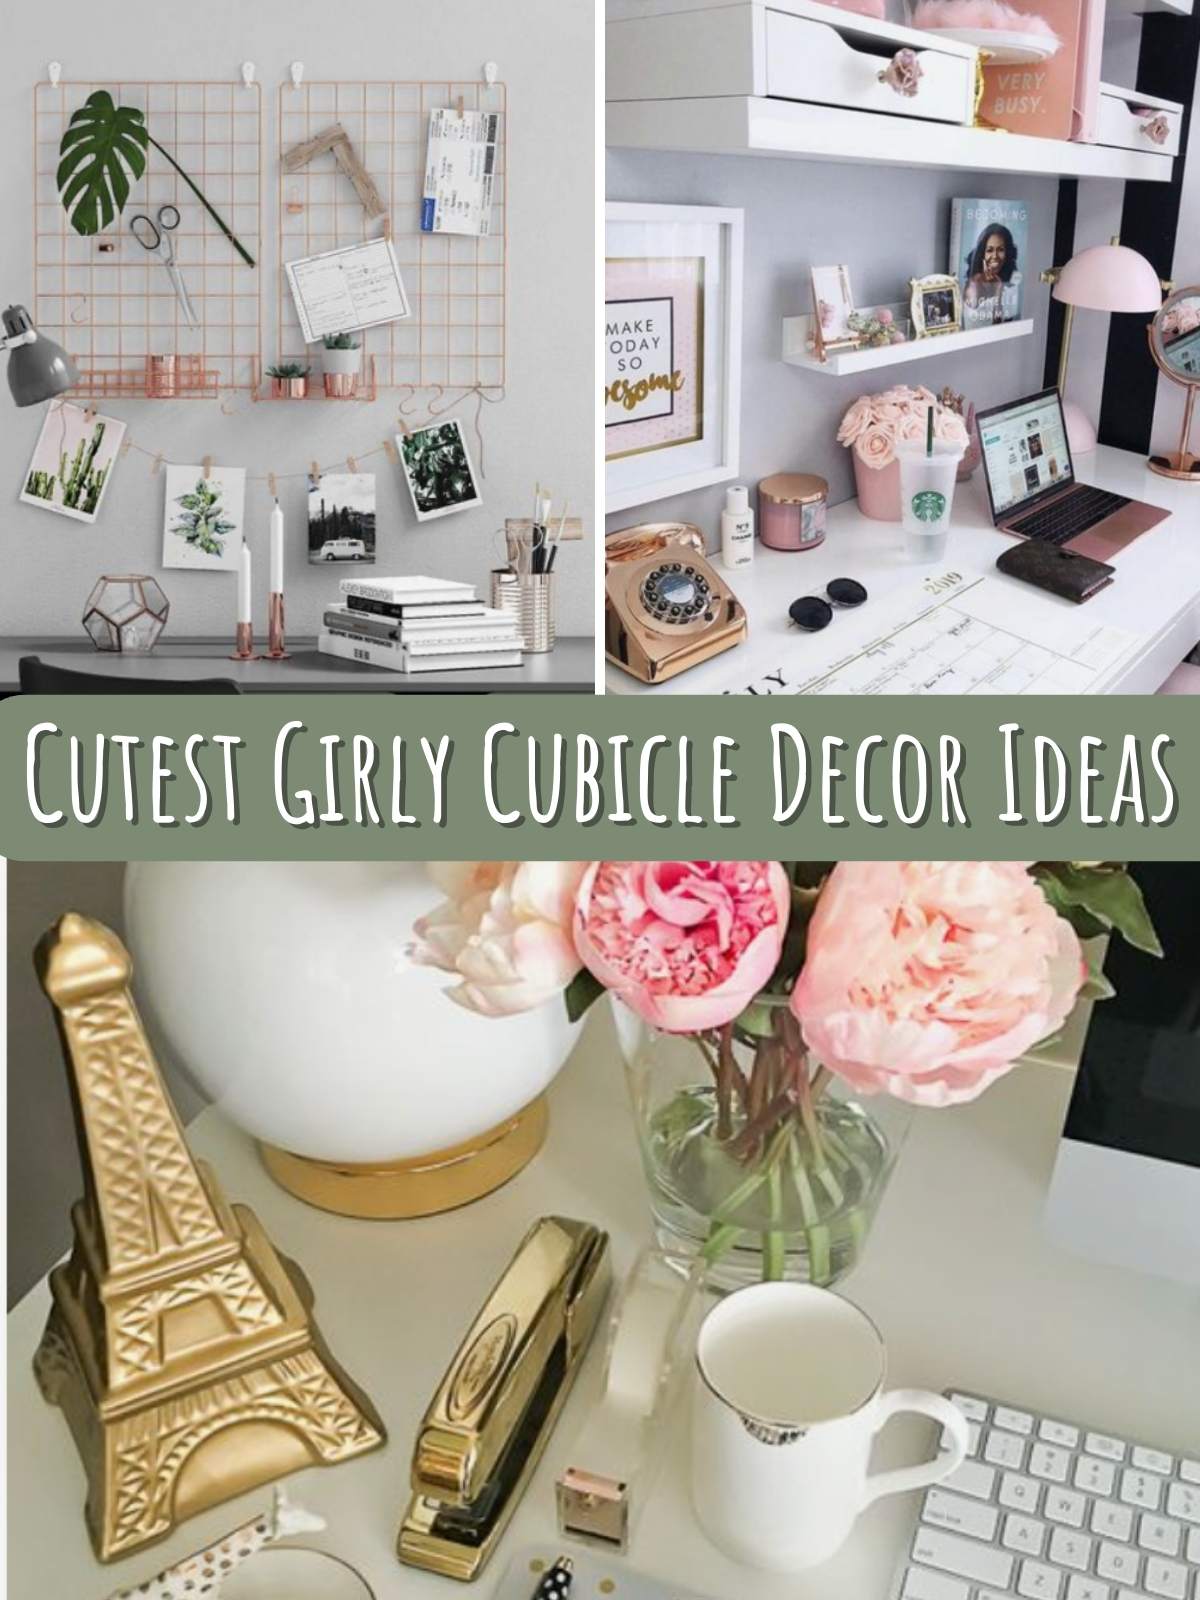 Cutest Girly Cubicle Decor Ideas